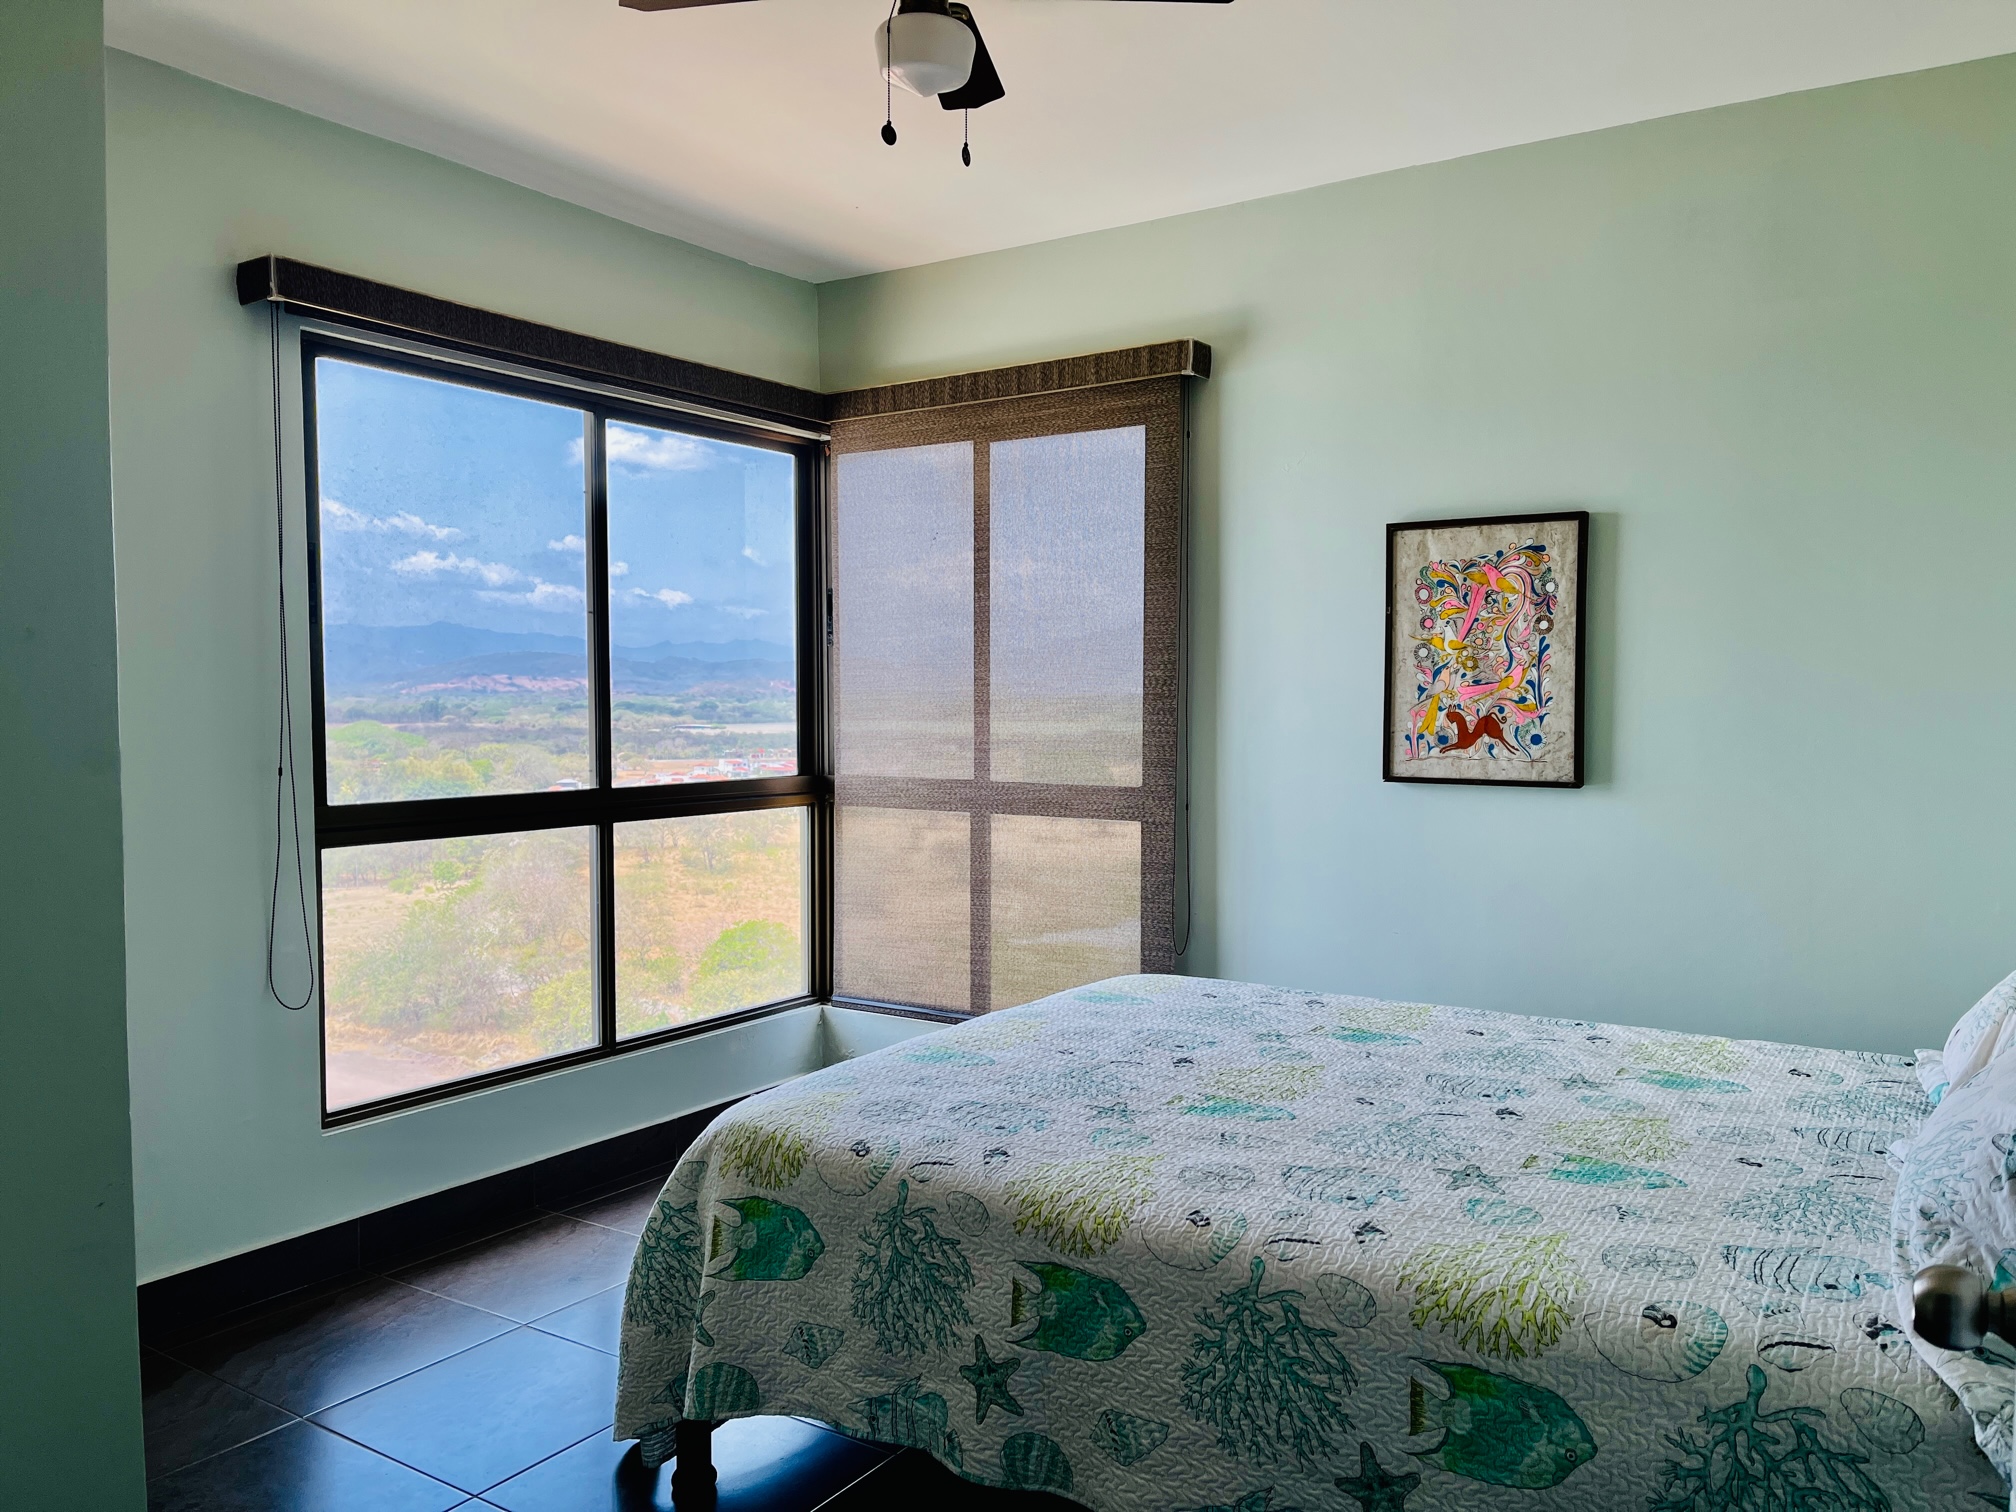 4-Bedroom Condo for Sale in PH Biltmore, Nueva Gorgona, Panama | 2-Storey Furnished Penthouse | Property ID: PLS-19833